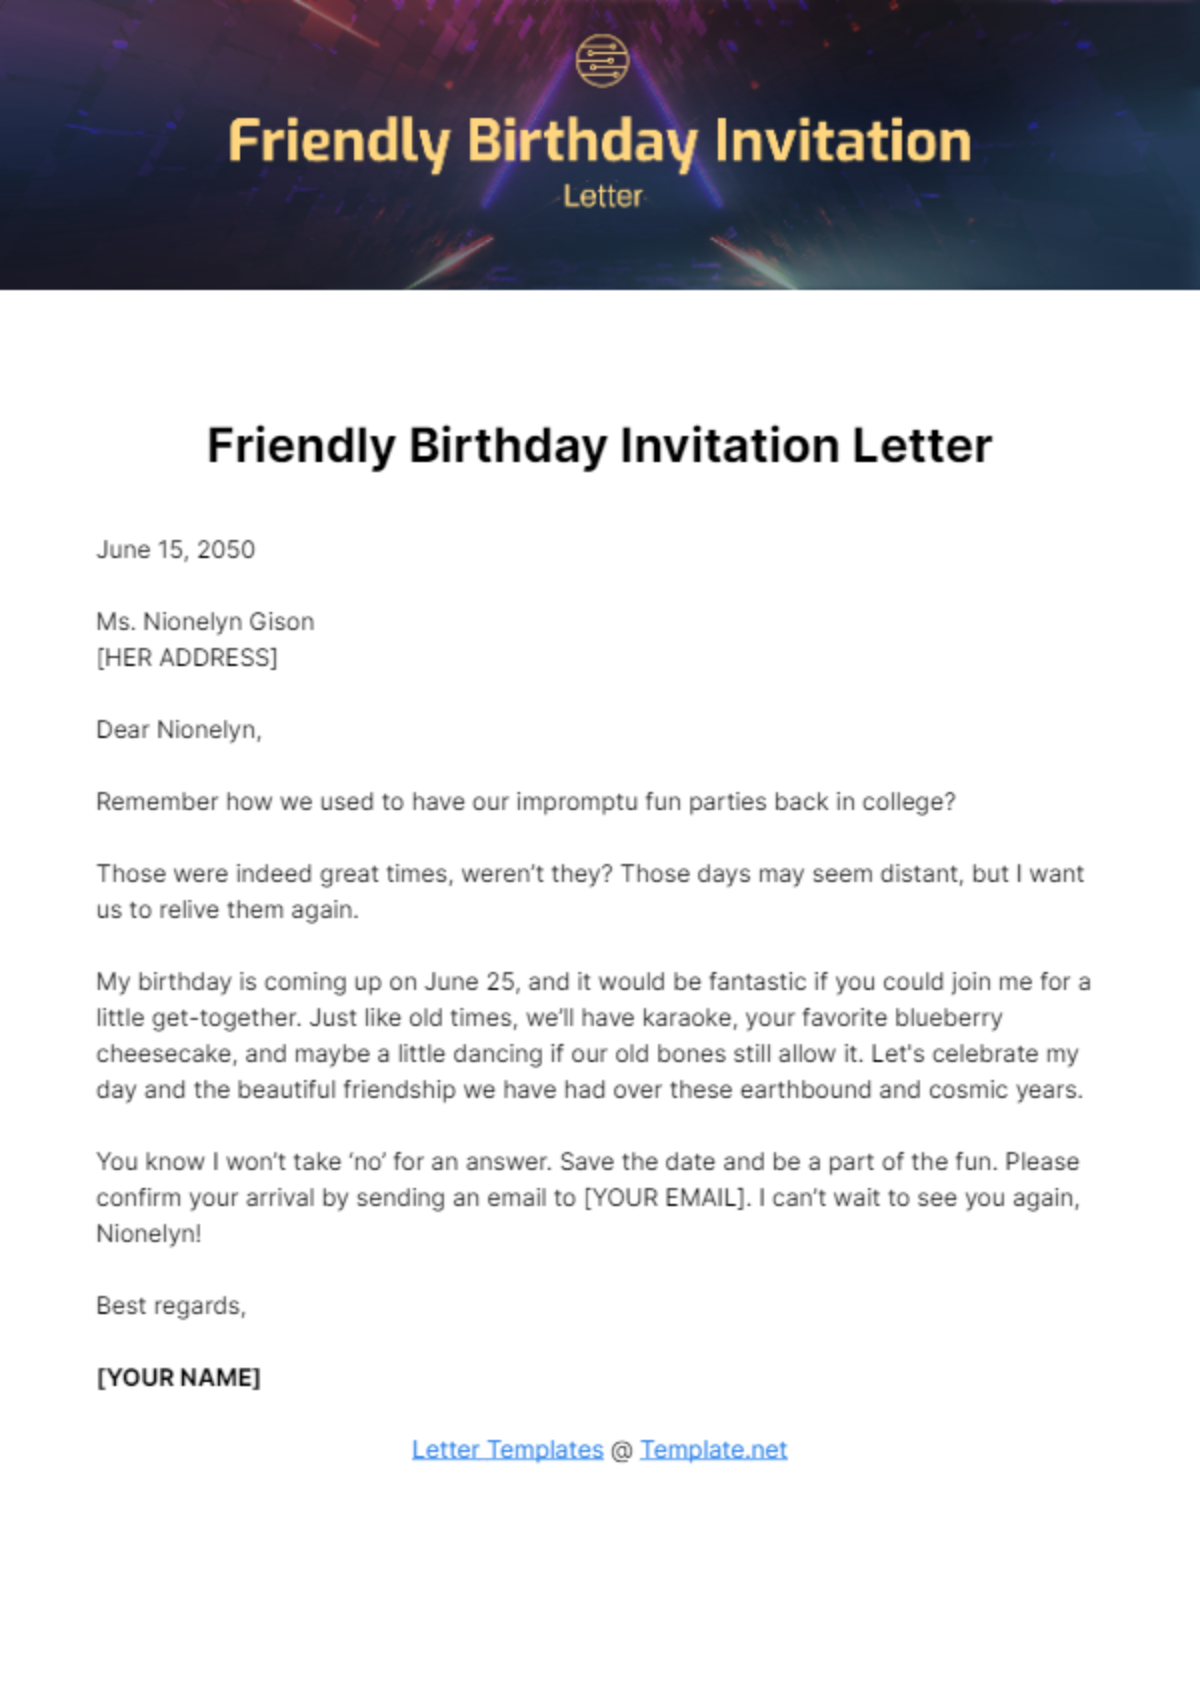 Free Friendly Birthday Invitation Letter Template